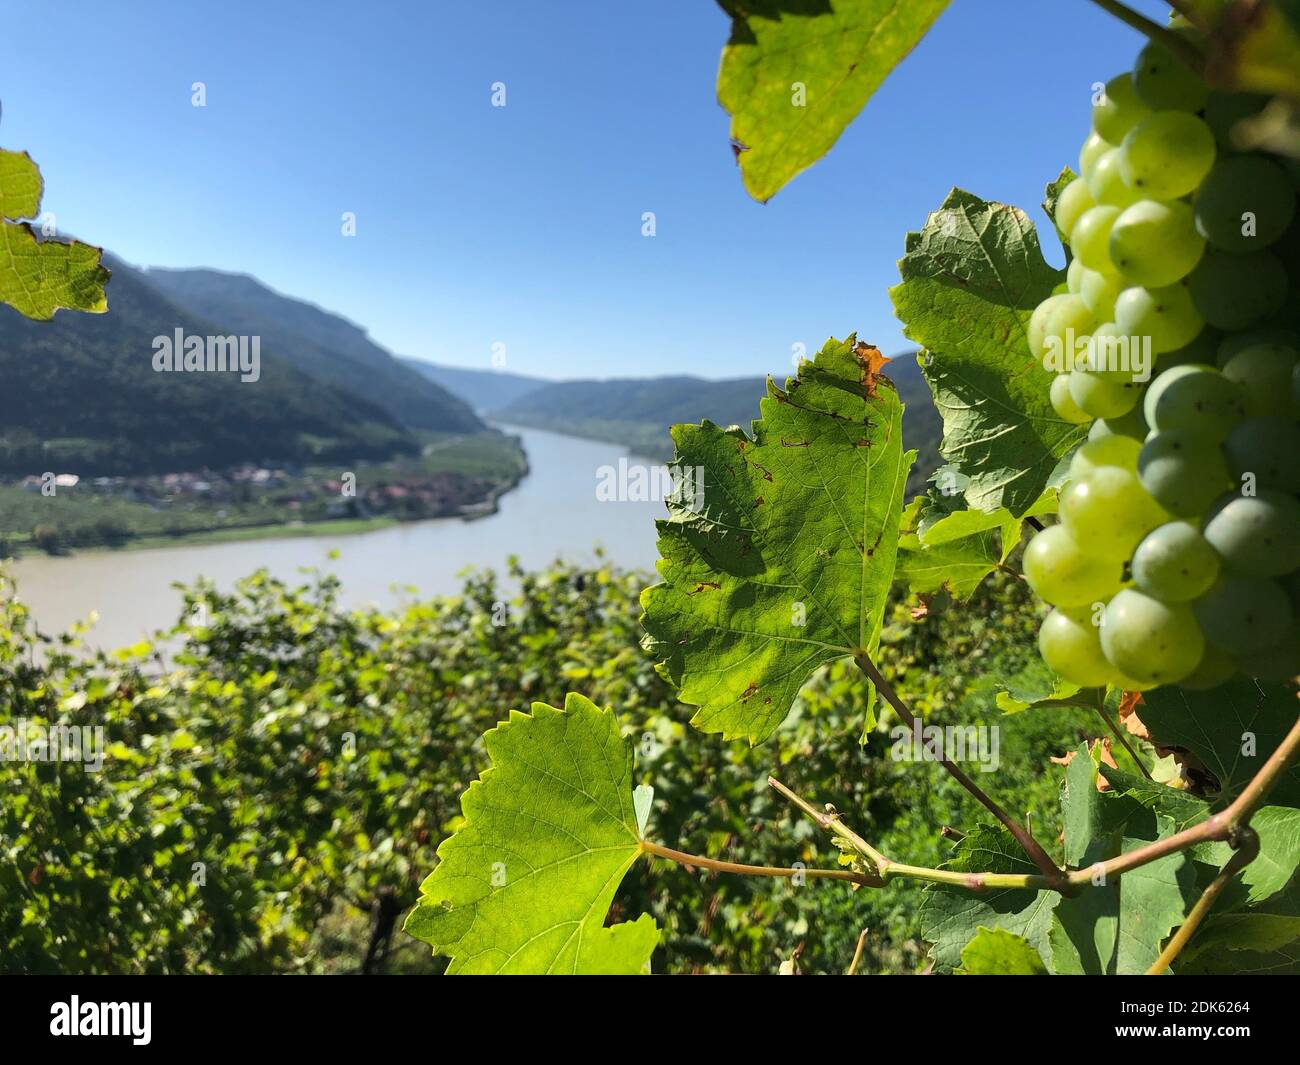 Spitz an der Donau, grapes, view from the Tausendimerberg on the Danube, Wachau, Lower Austria Stock Photo